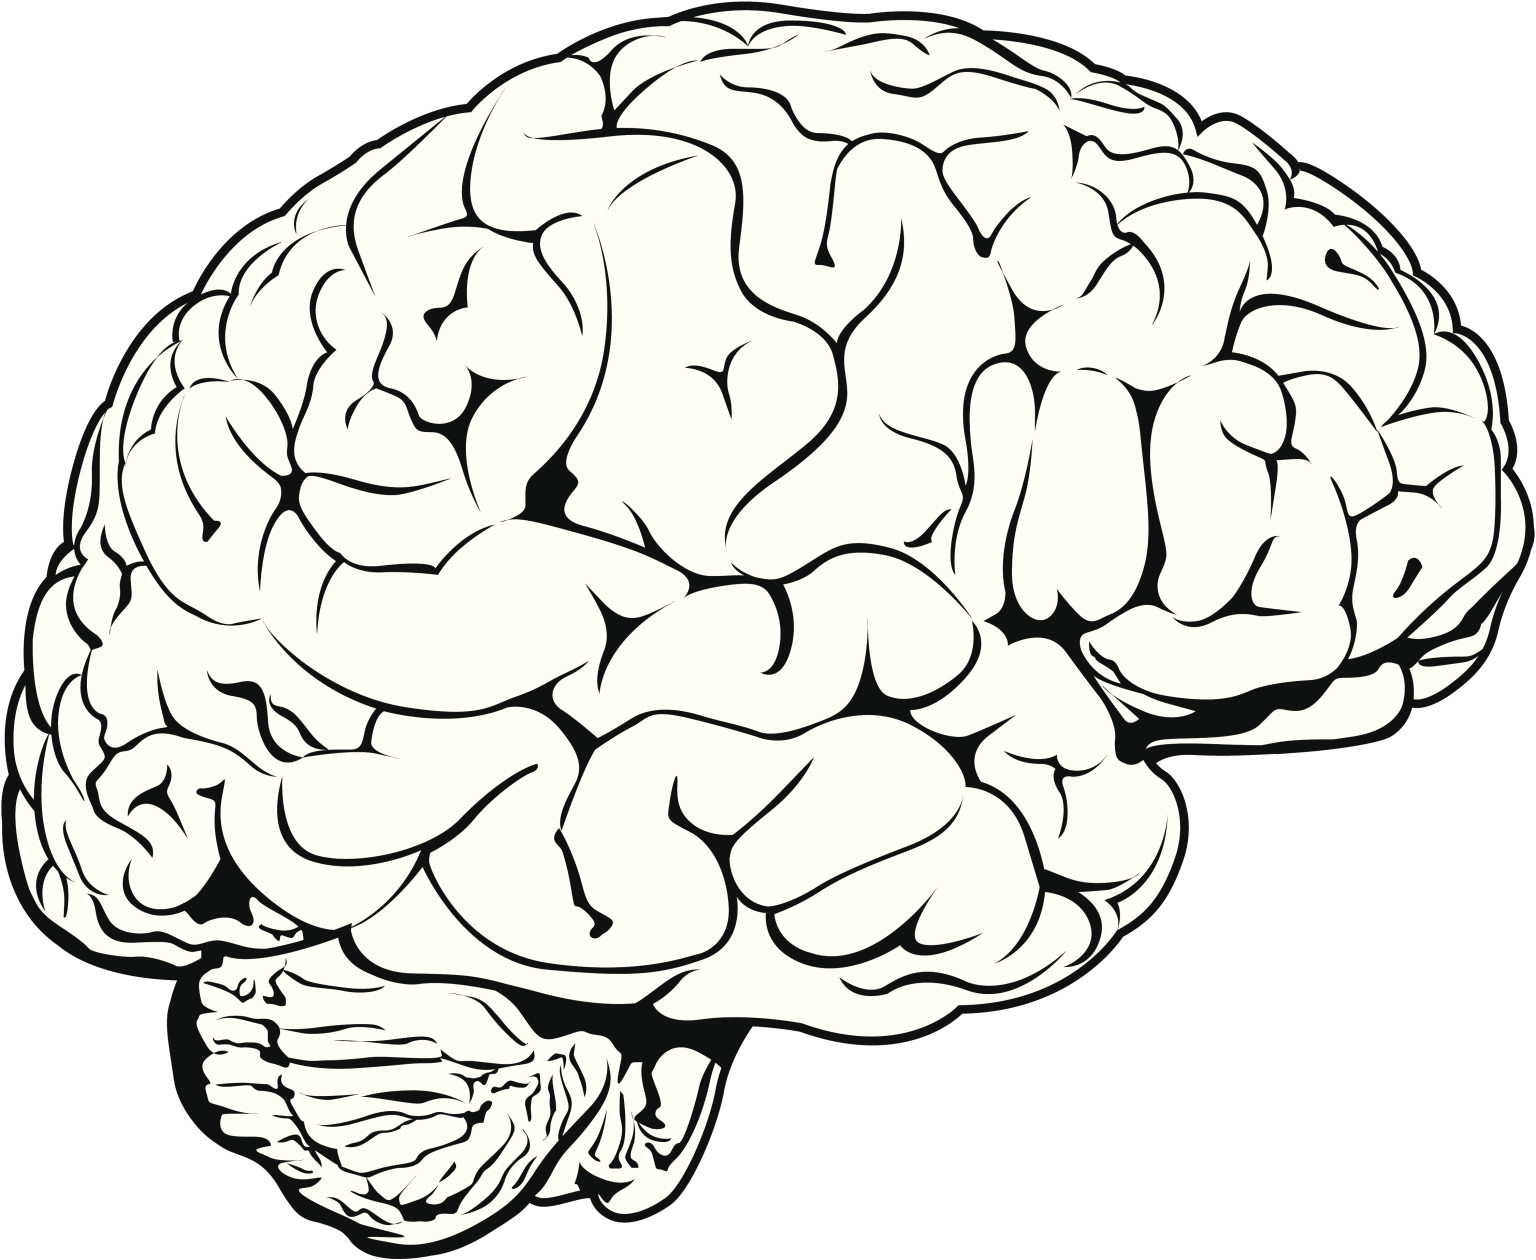 Brain pdf. Мозг рисунок. Мозг контур.